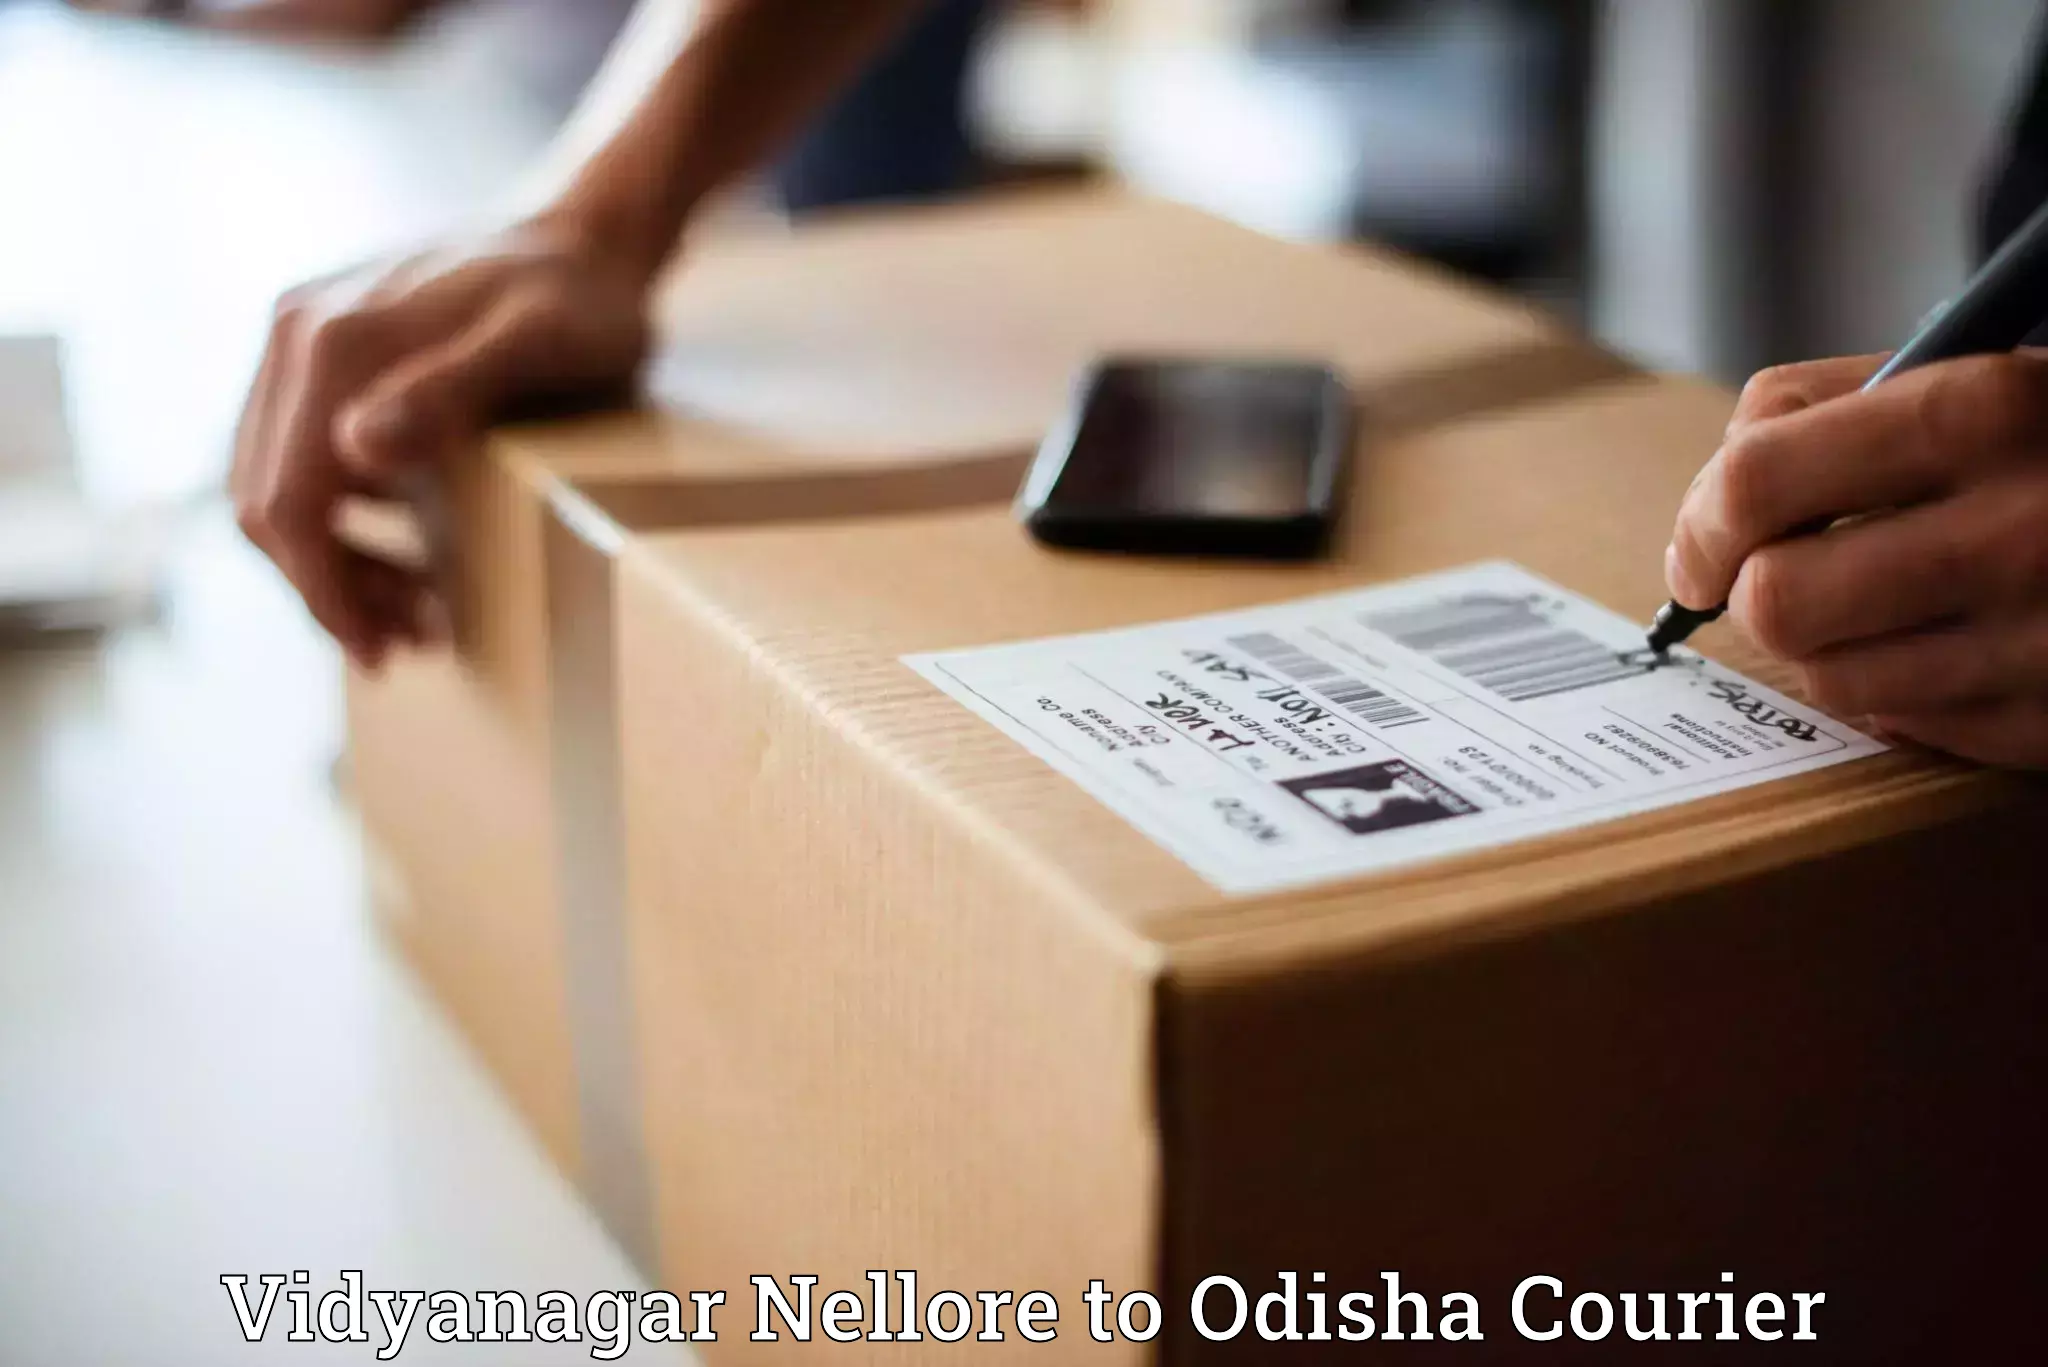 24/7 courier service Vidyanagar Nellore to Odisha